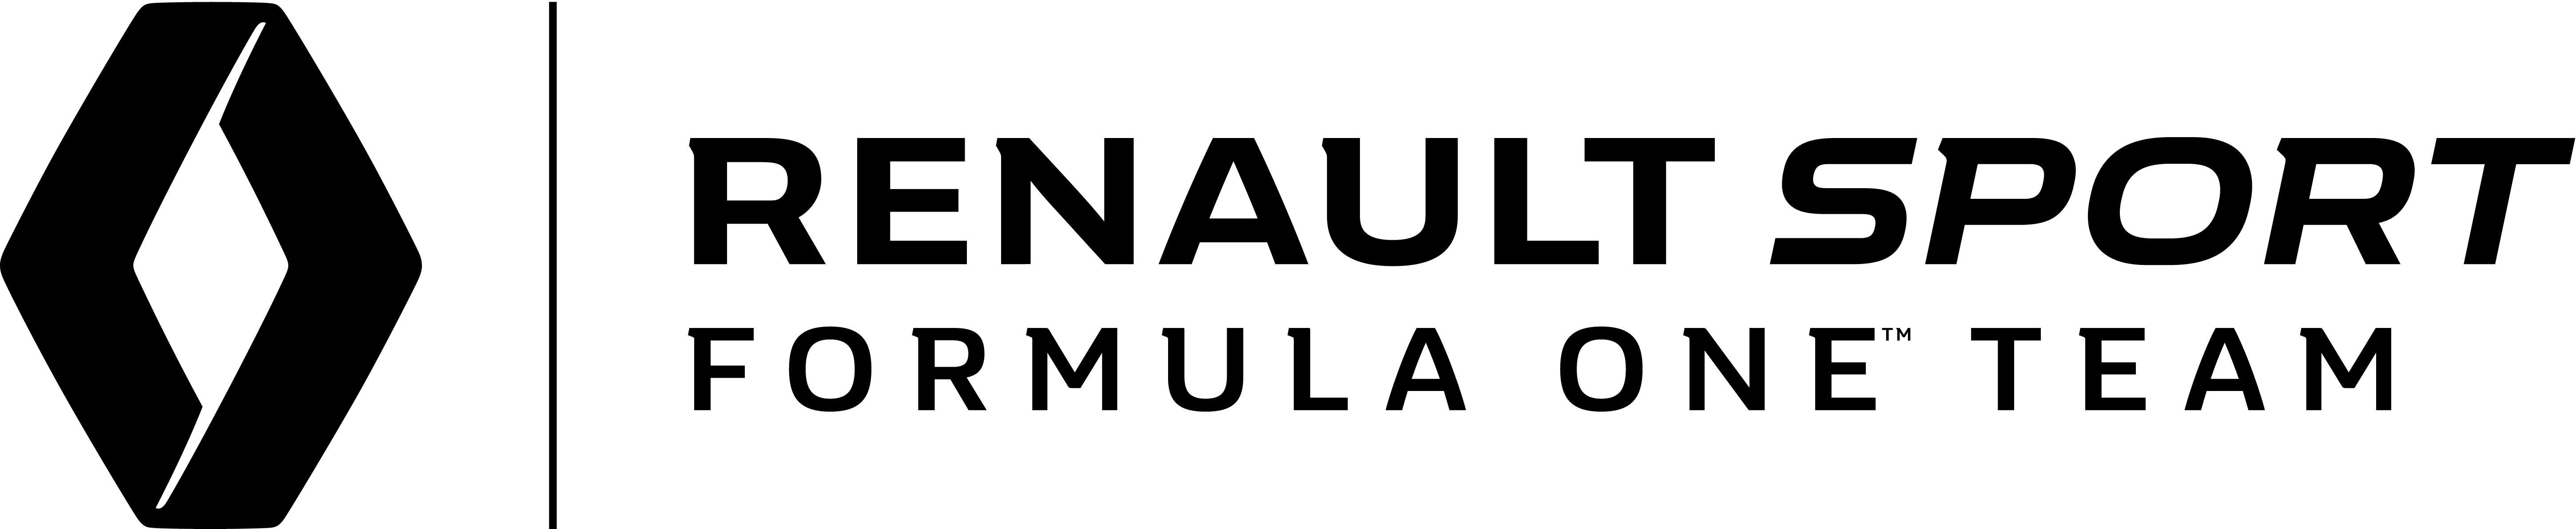 Renault F1 2018 Logo - Βαθμολογίες